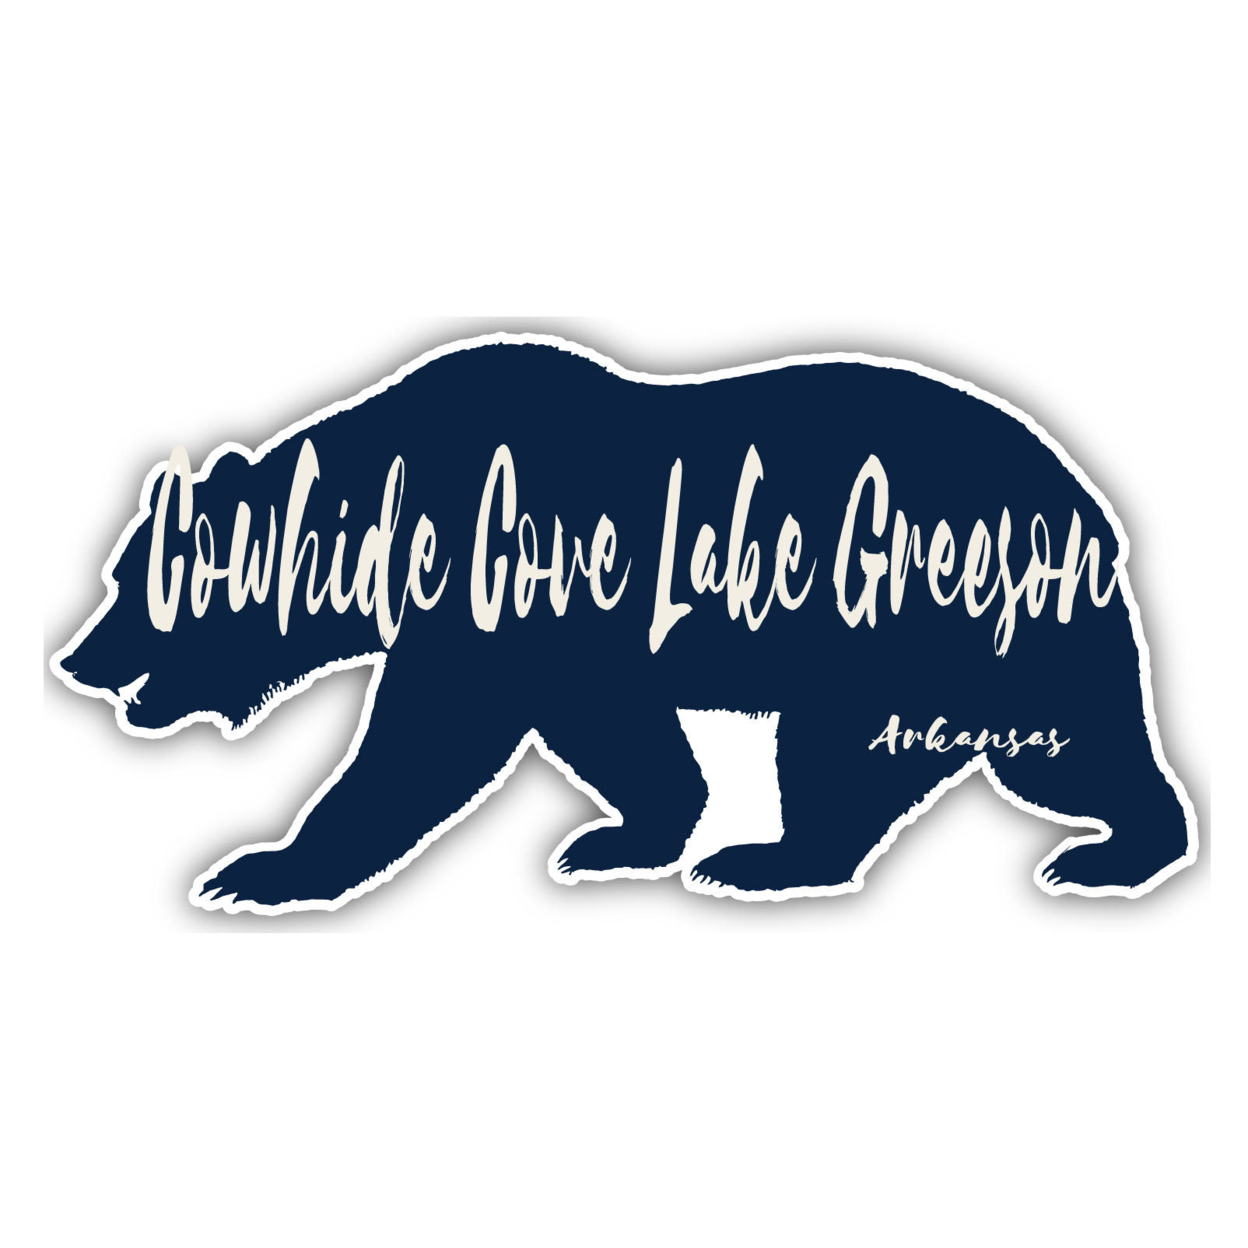 Cowhide Cove Lake Greeson Arkansas Souvenir Decorative Stickers (Choose Theme And Size) - 4-Pack, 12-Inch, Bear